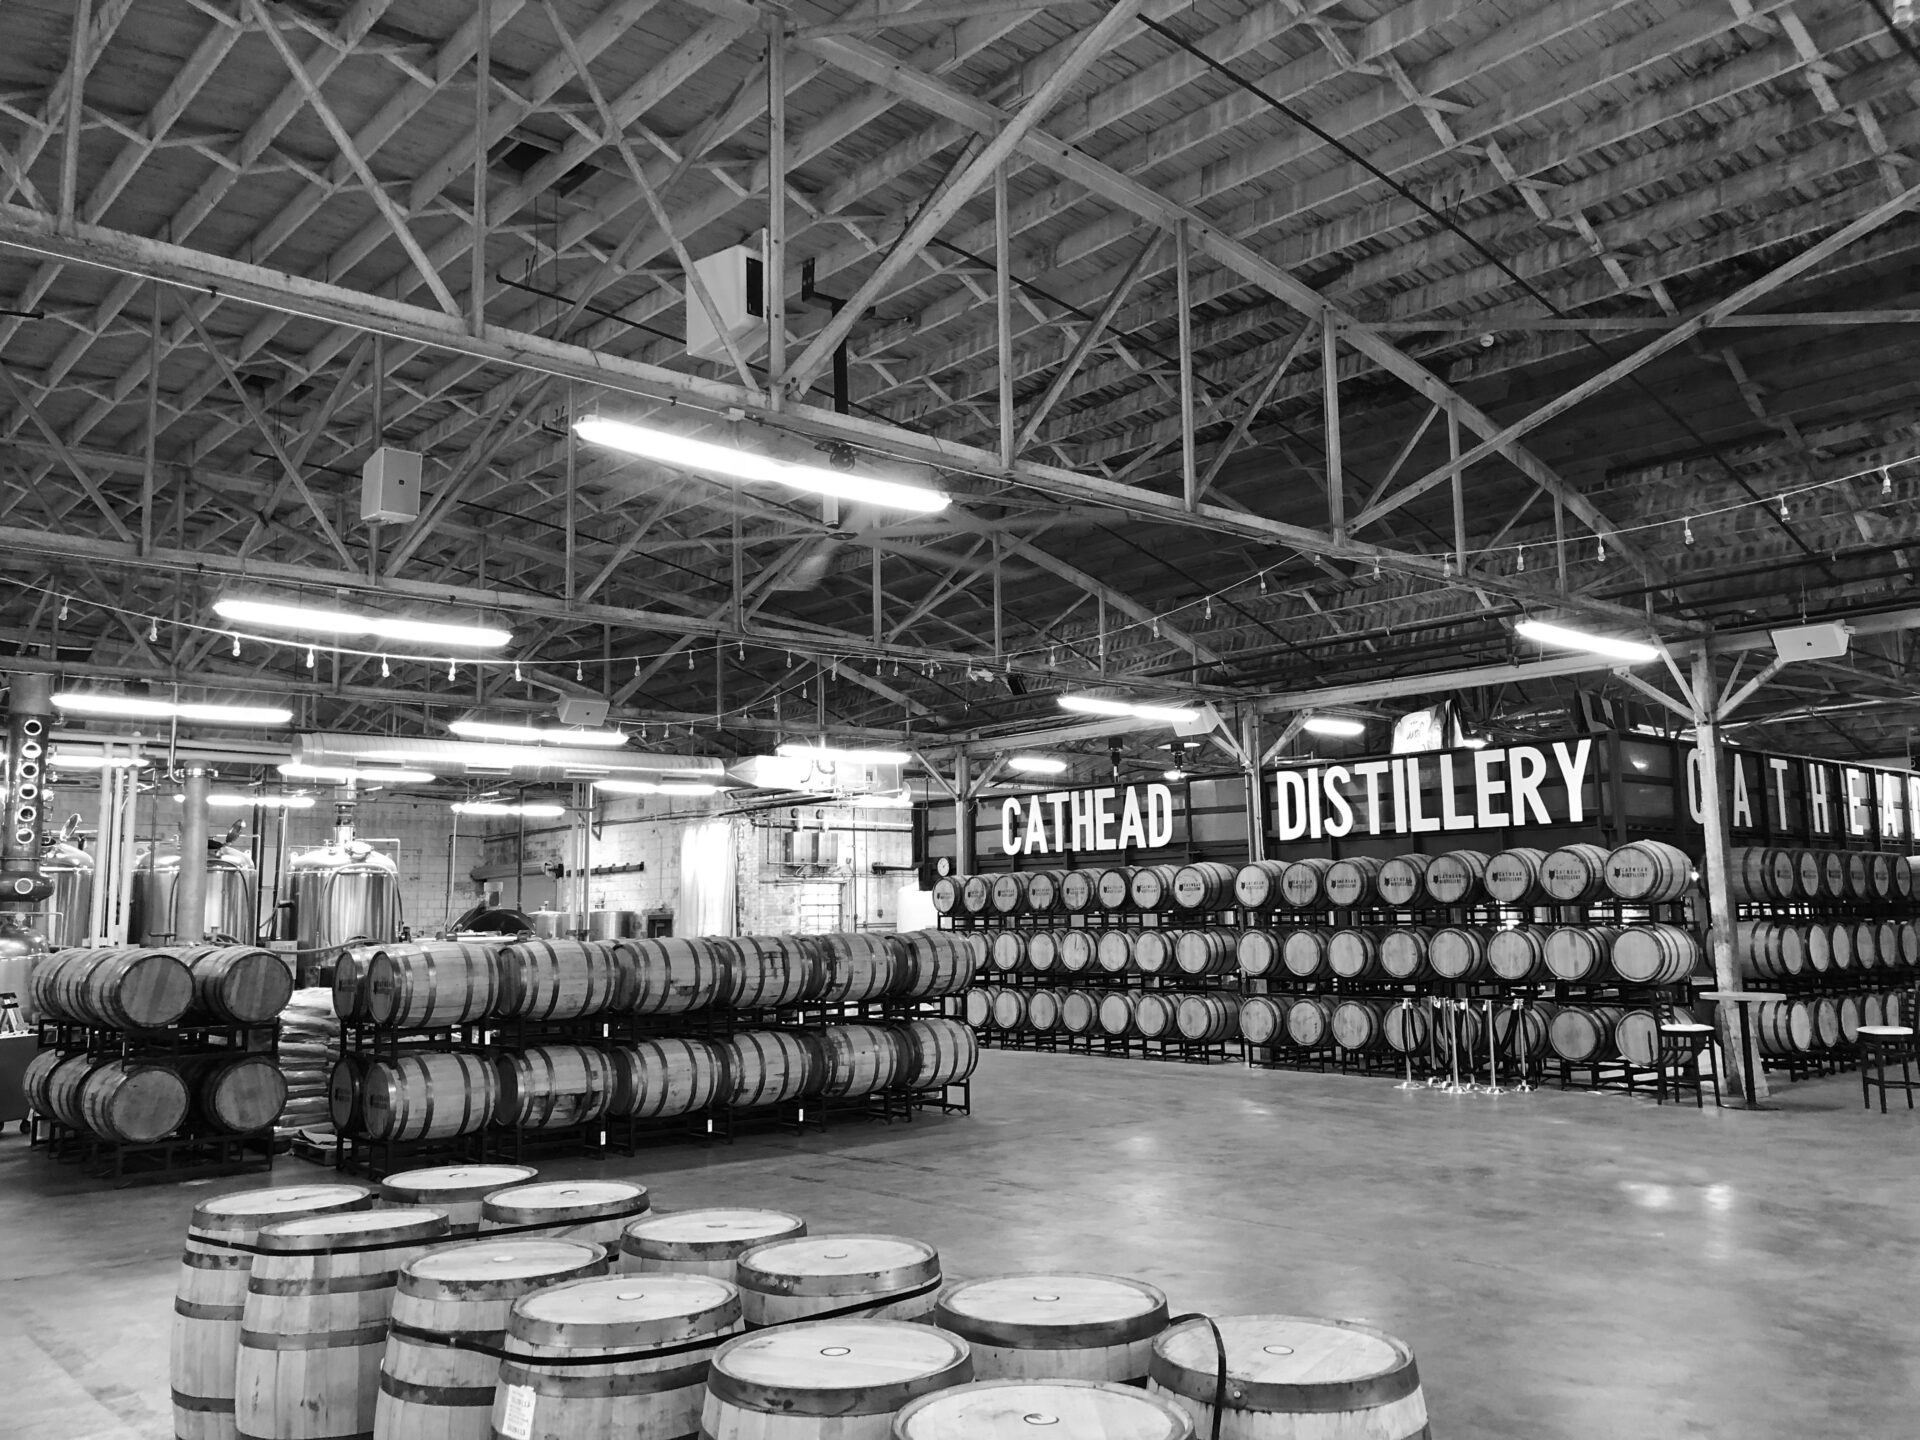 Warehouse of Cathead Distillery